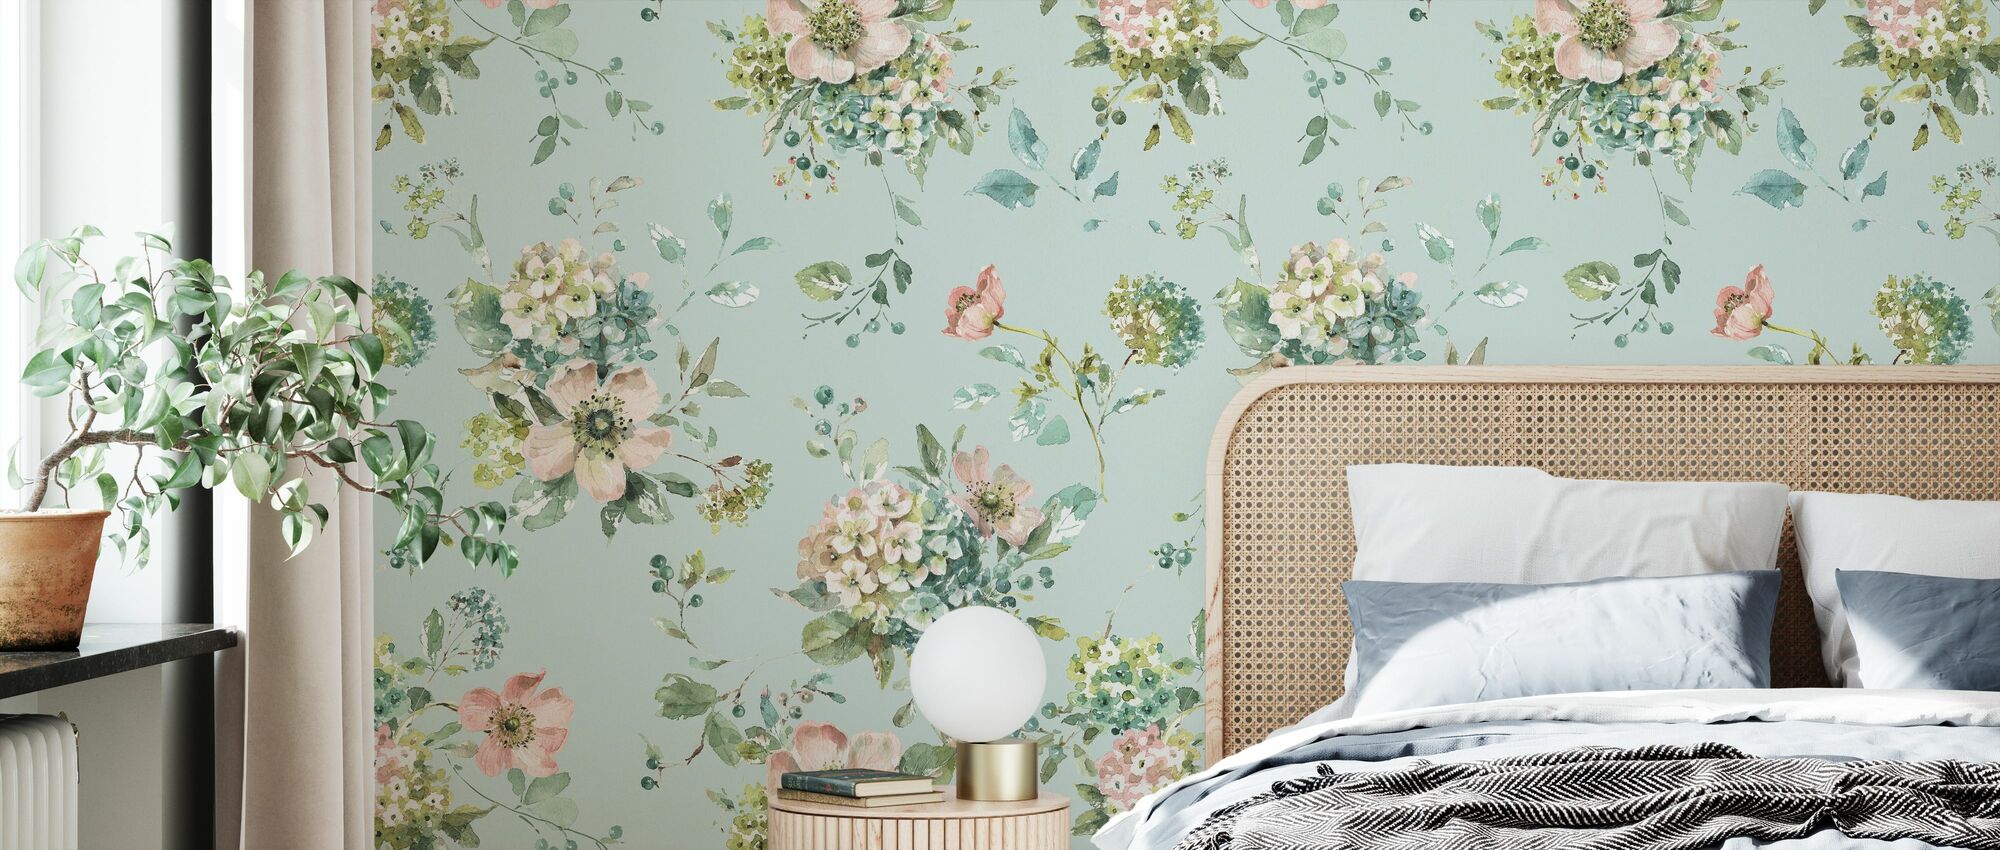  21 fabulous spring-inspired wallpapers - Mint Crush wall mural / wallpaper